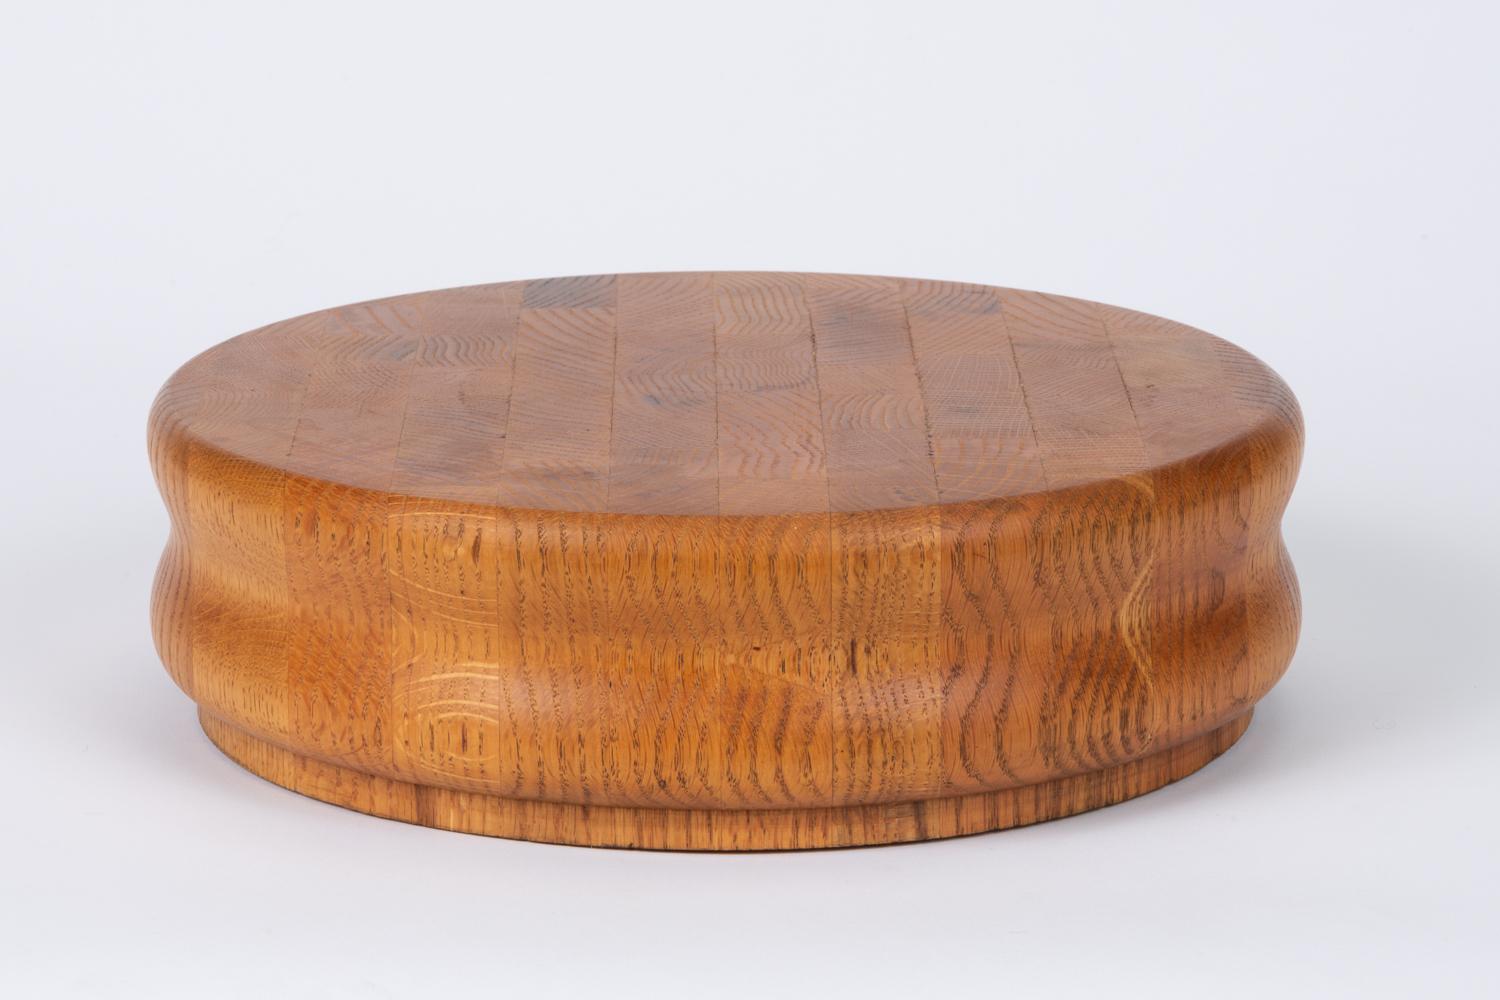 American Studio Craft Turned Wood Cutting Board / Serving Tray